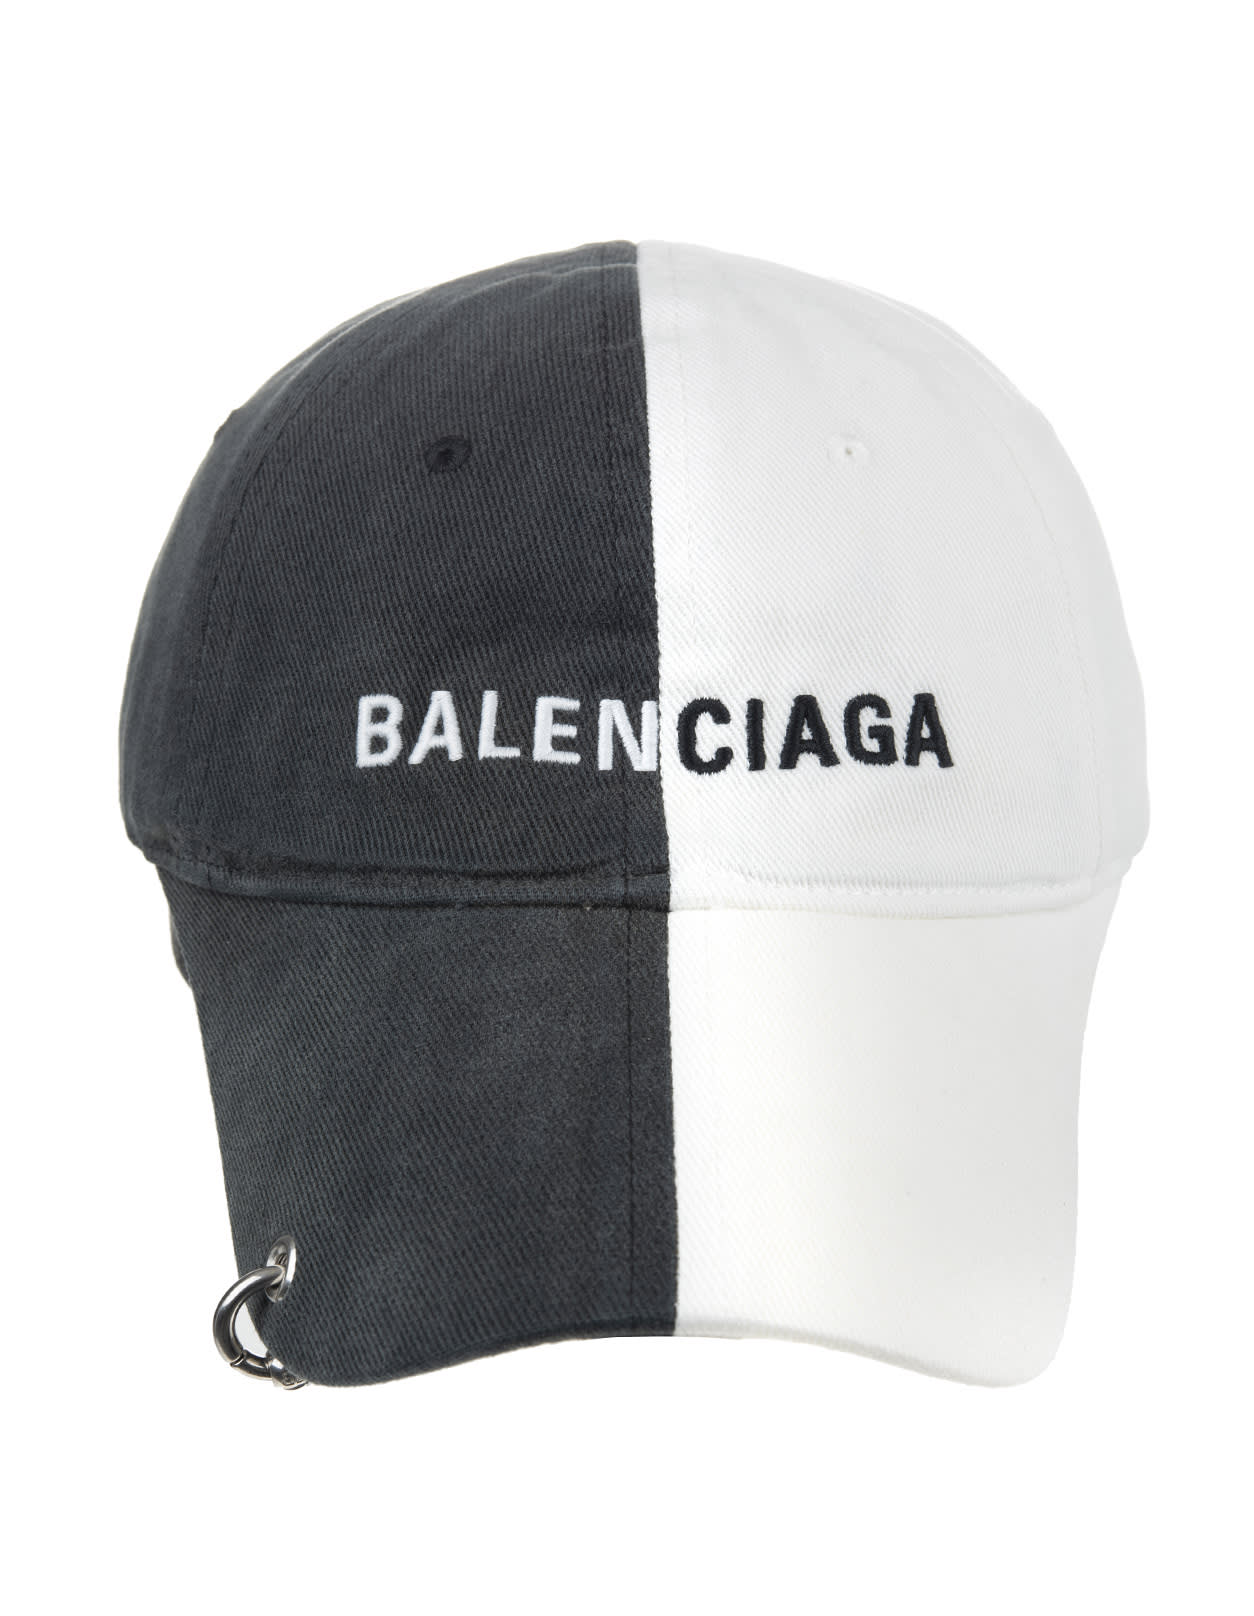 BALENCIAGA WOMAN BLACK AND WHITE 50/50 BASEBALL CAP,656455-310B2 1077